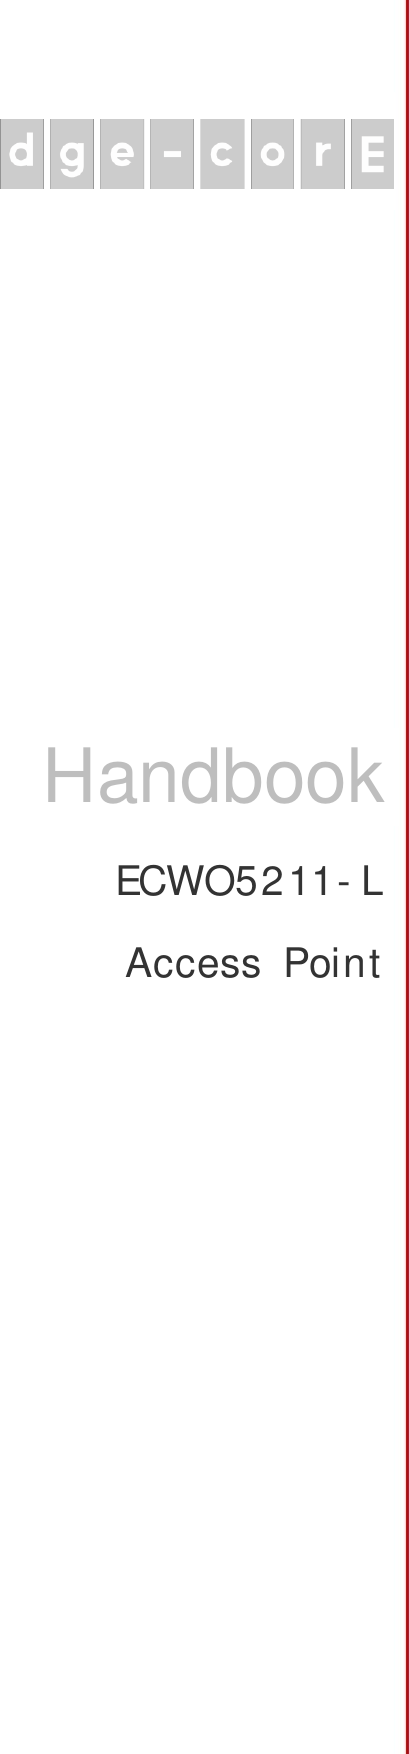 ECWO5211- L Access  Point Handbook 